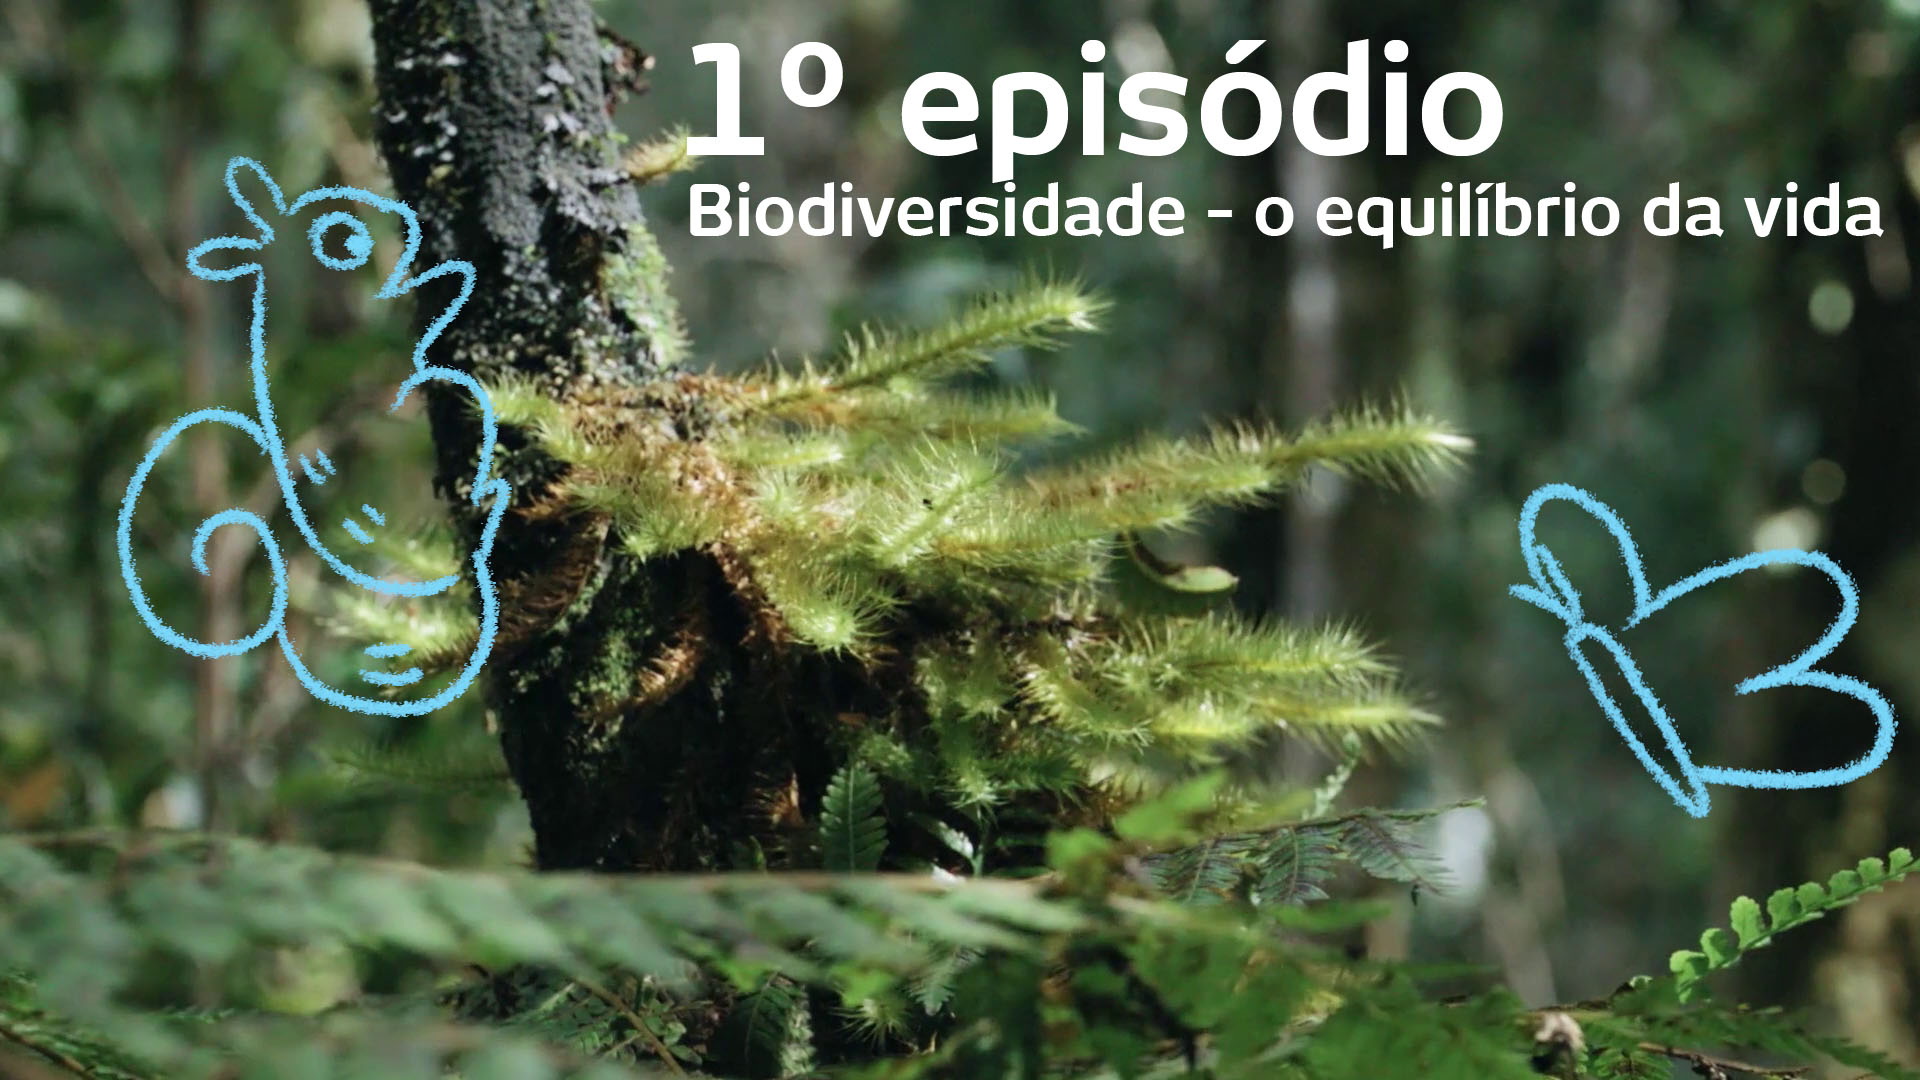 Episode 1 - Biodiversity – the balance of life on Earth